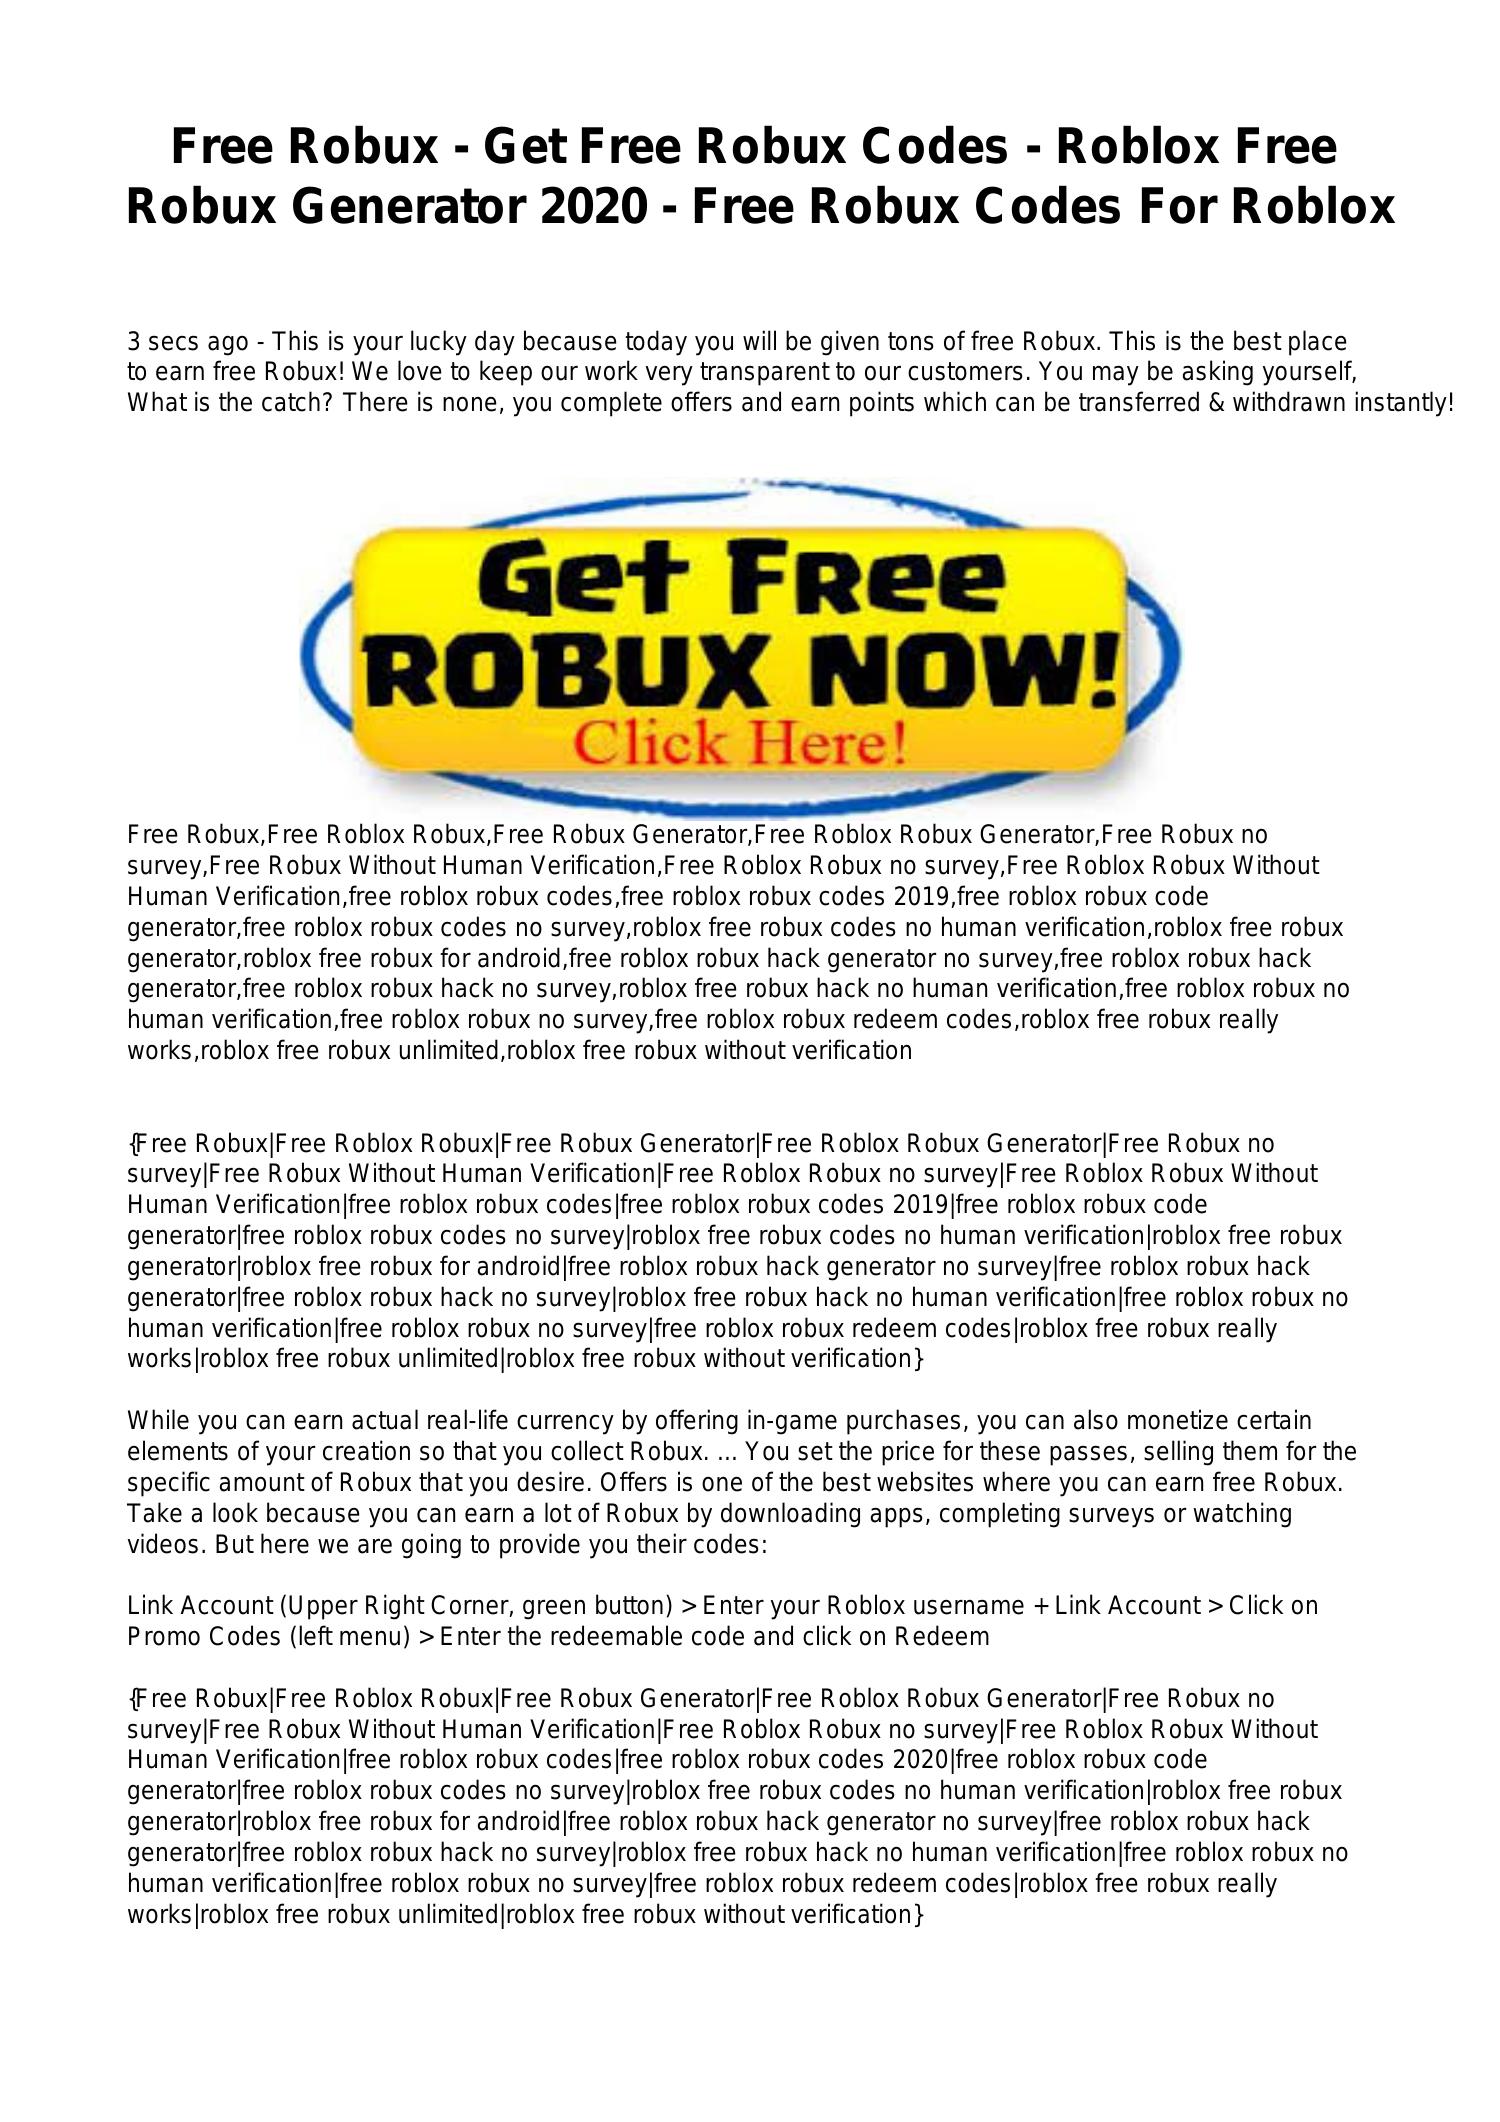 Free Robux Get Free Robux Codes Roblox Free Robux Generator - how to get free roblox codes 2020